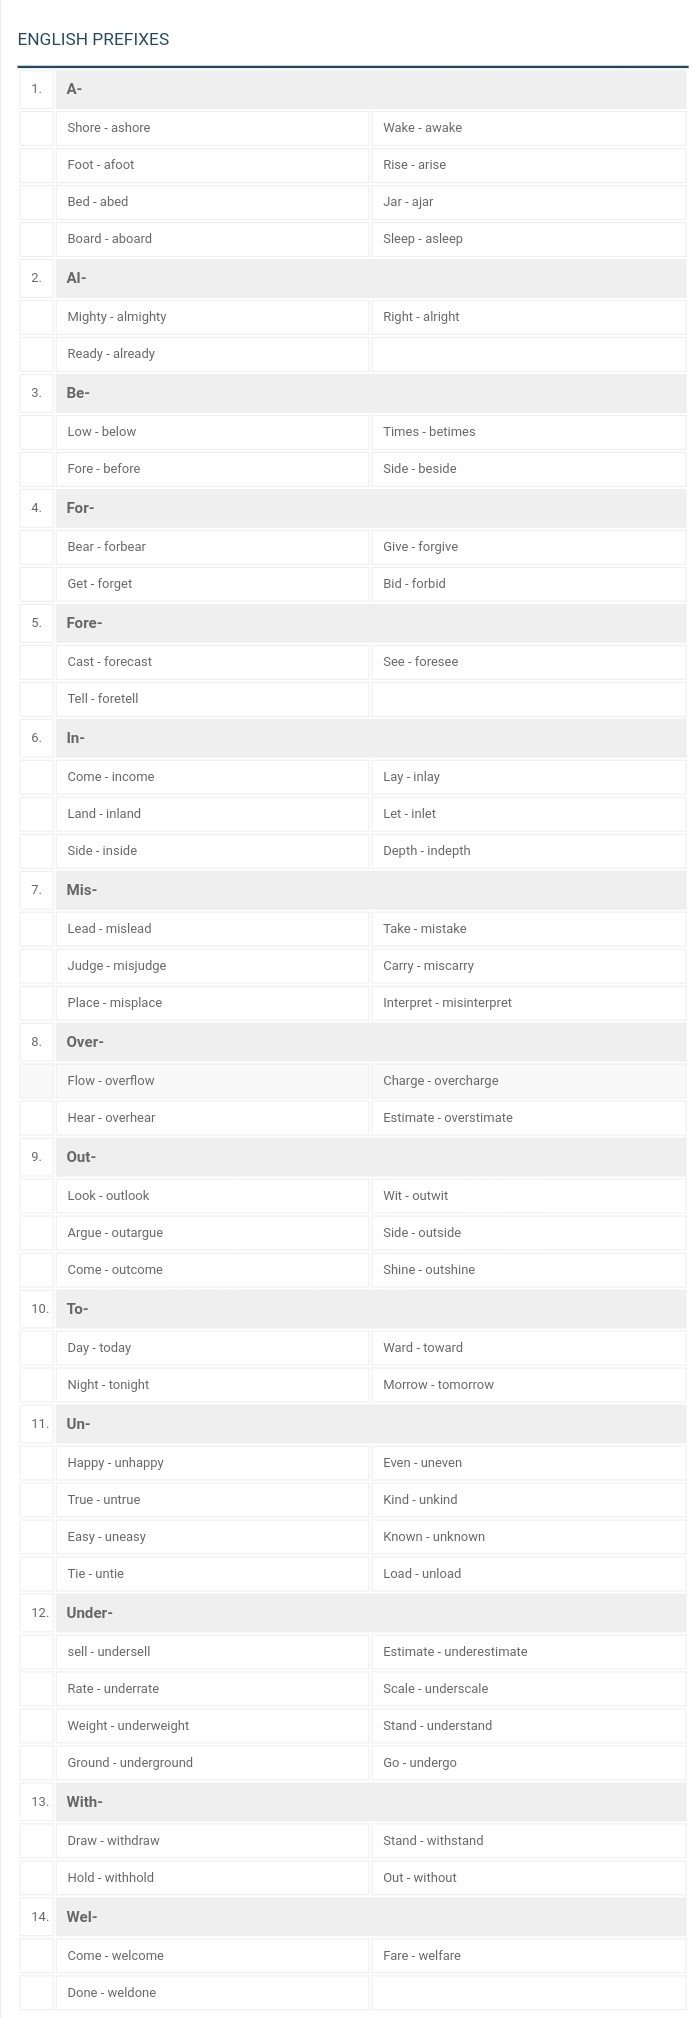 Affixes: Prefixes and Suffixes 2